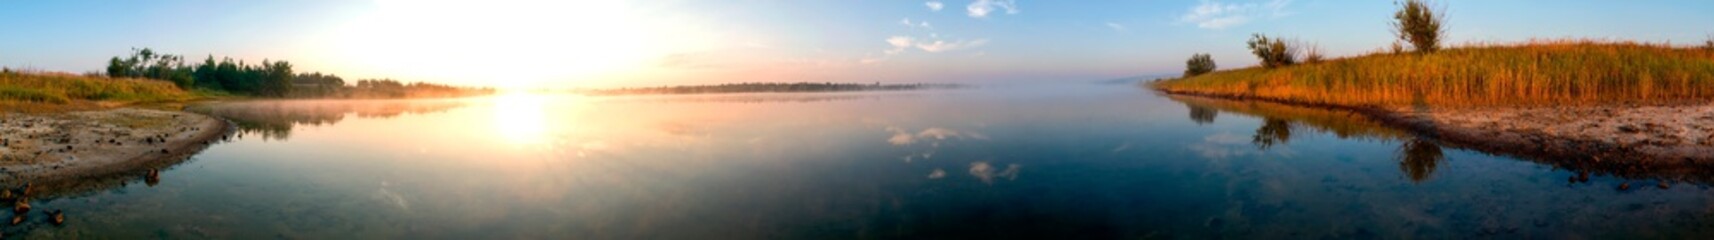 beautiful sunrise on the autumn lake